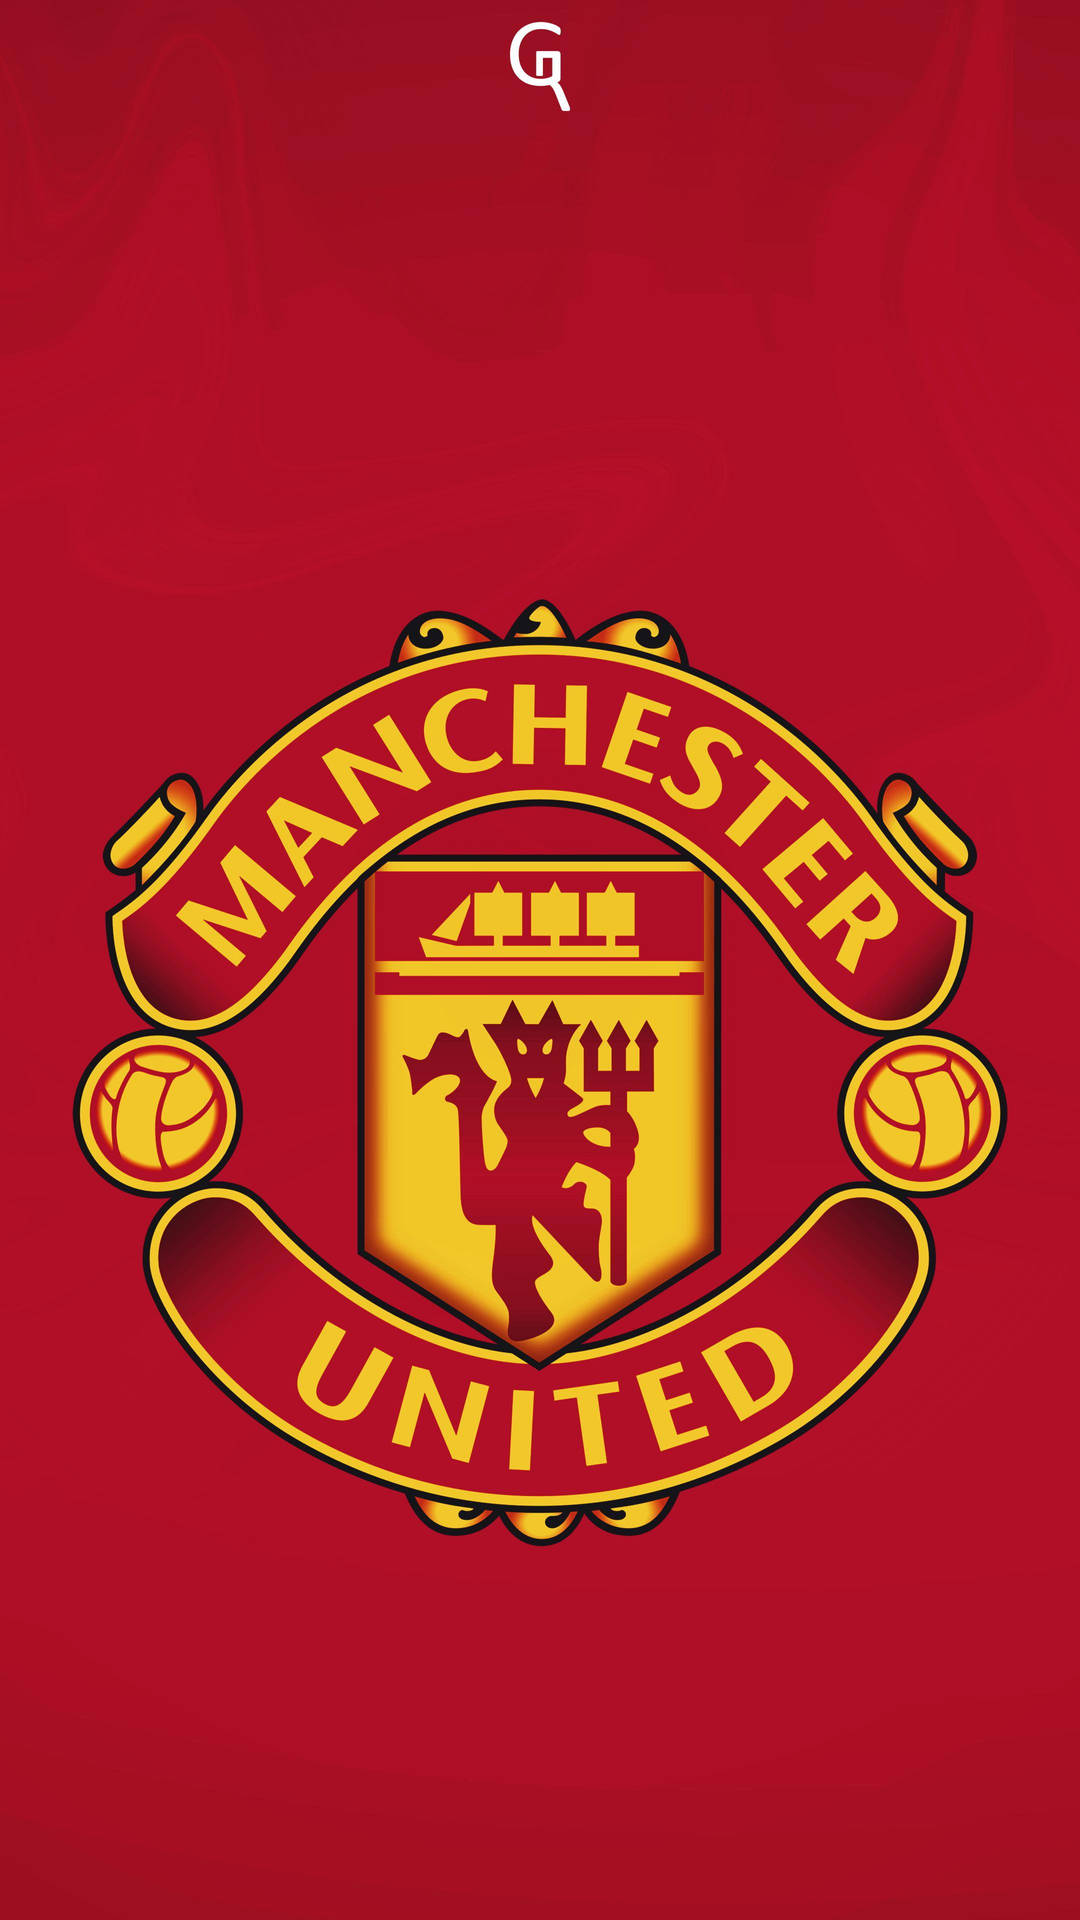 The Devil Symbol In Manchester United Mobile